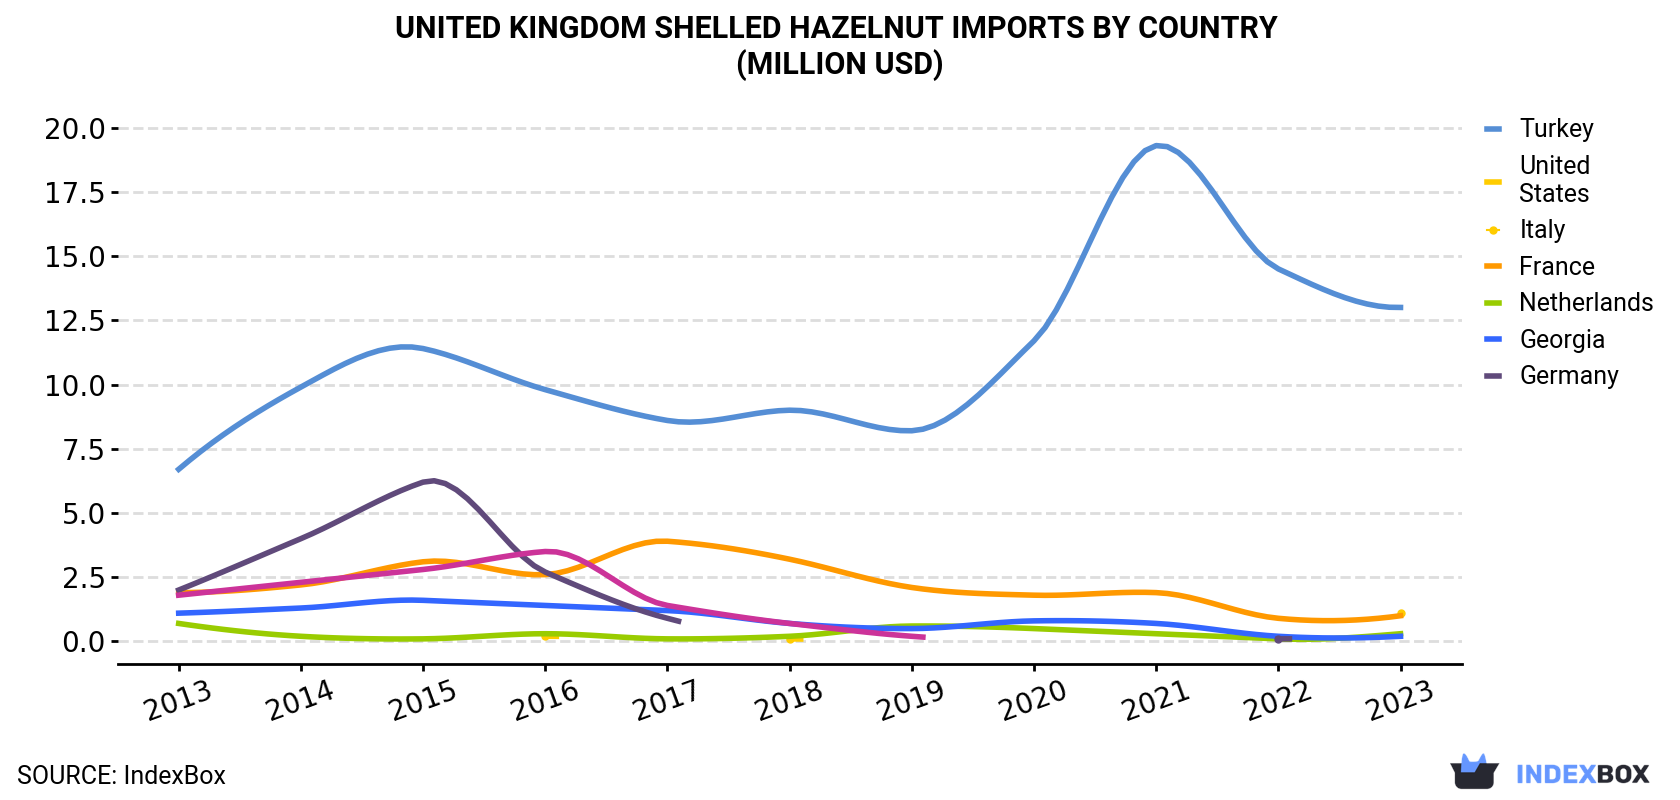 United Kingdom Shelled Hazelnut Imports By Country (Million USD)